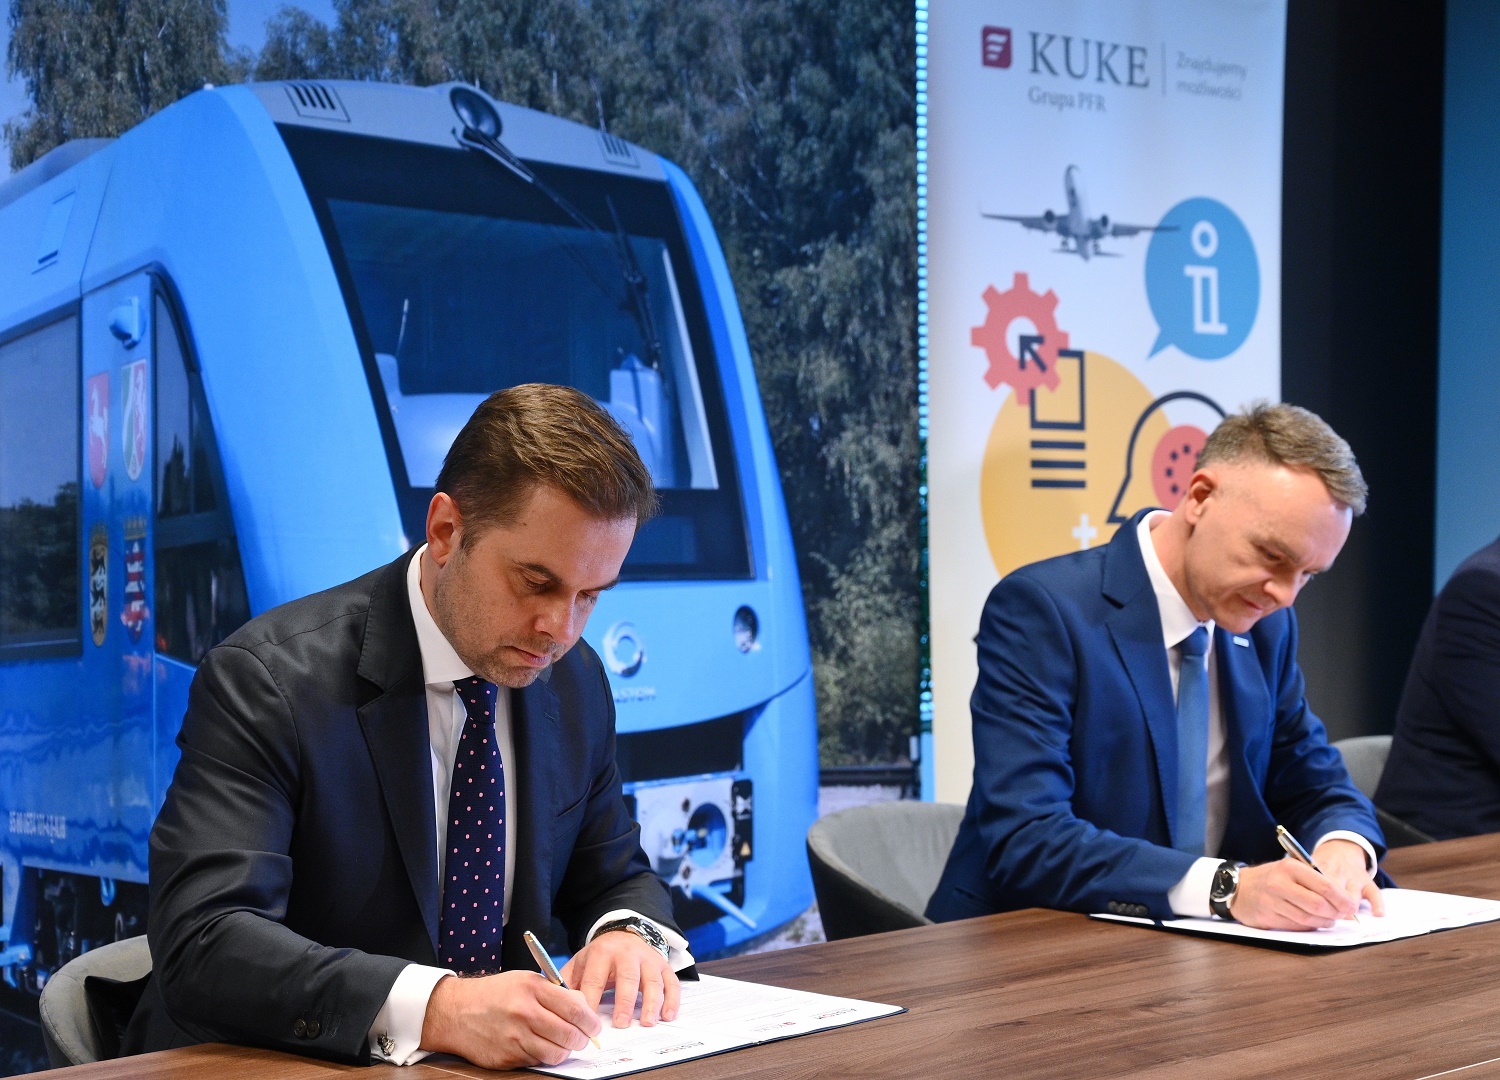 Alstom and KUKE sign strategic partnership agreement